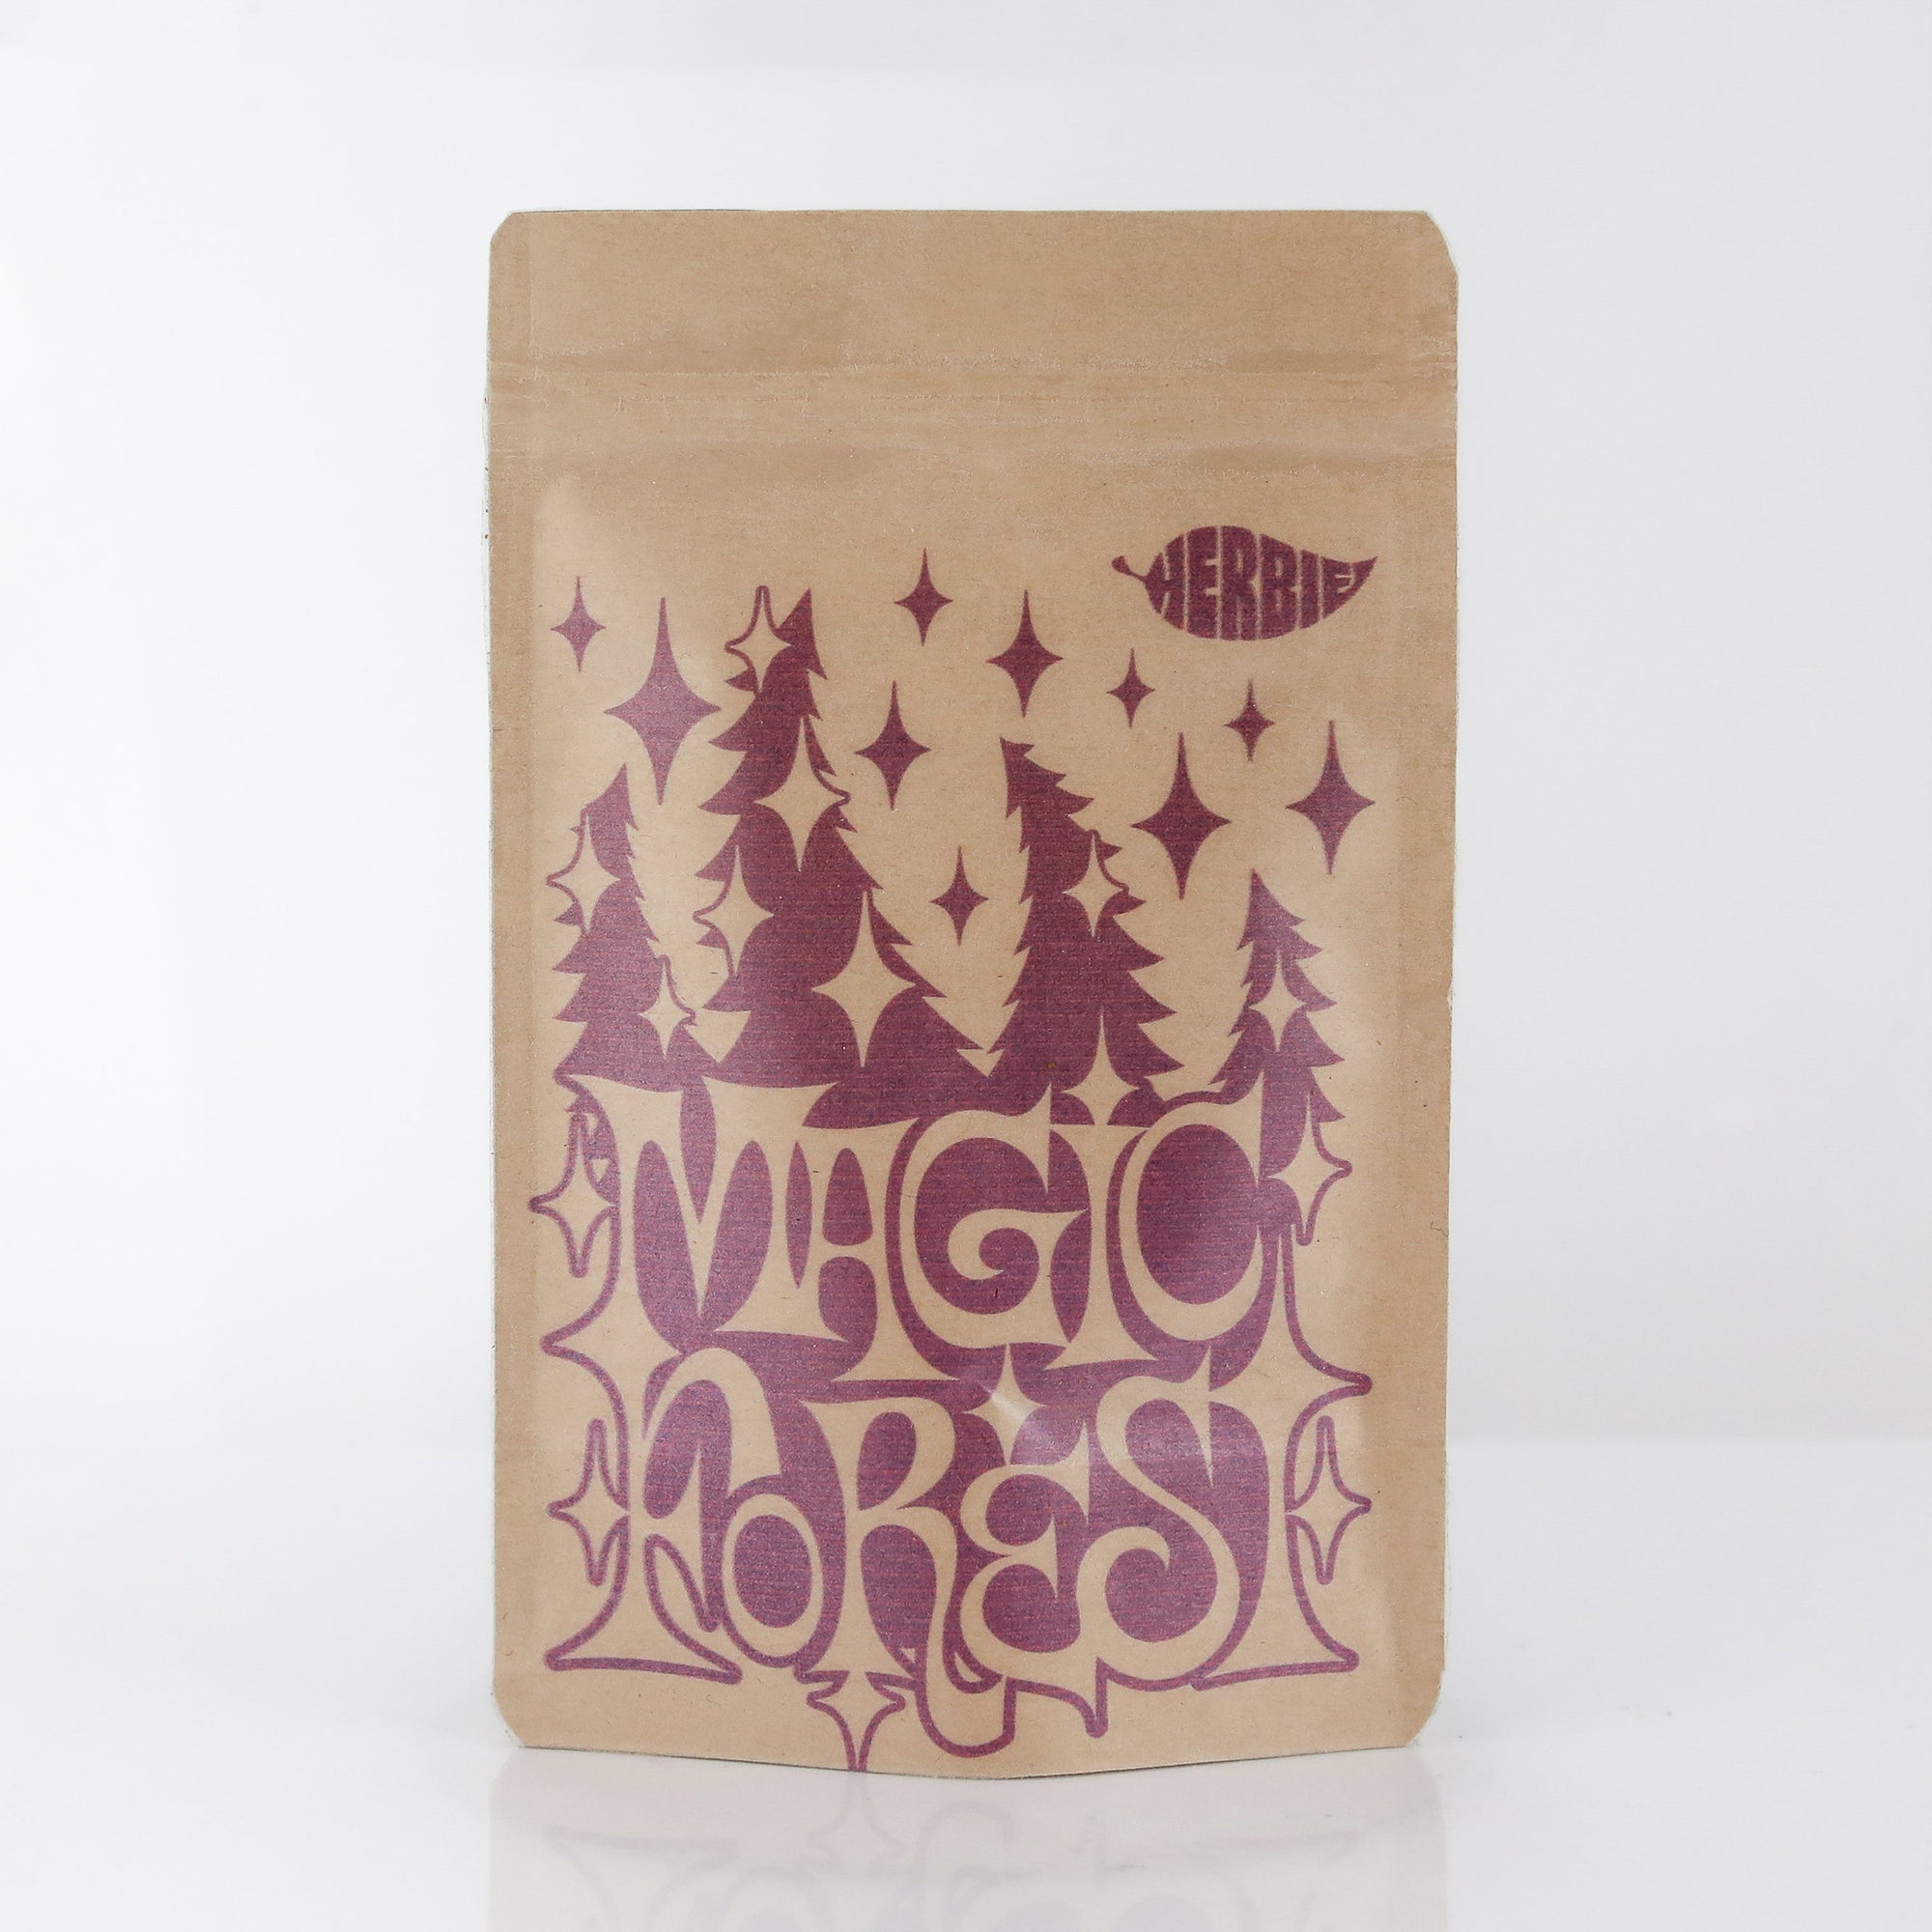 Herbie Magic Forest package (25 grams)